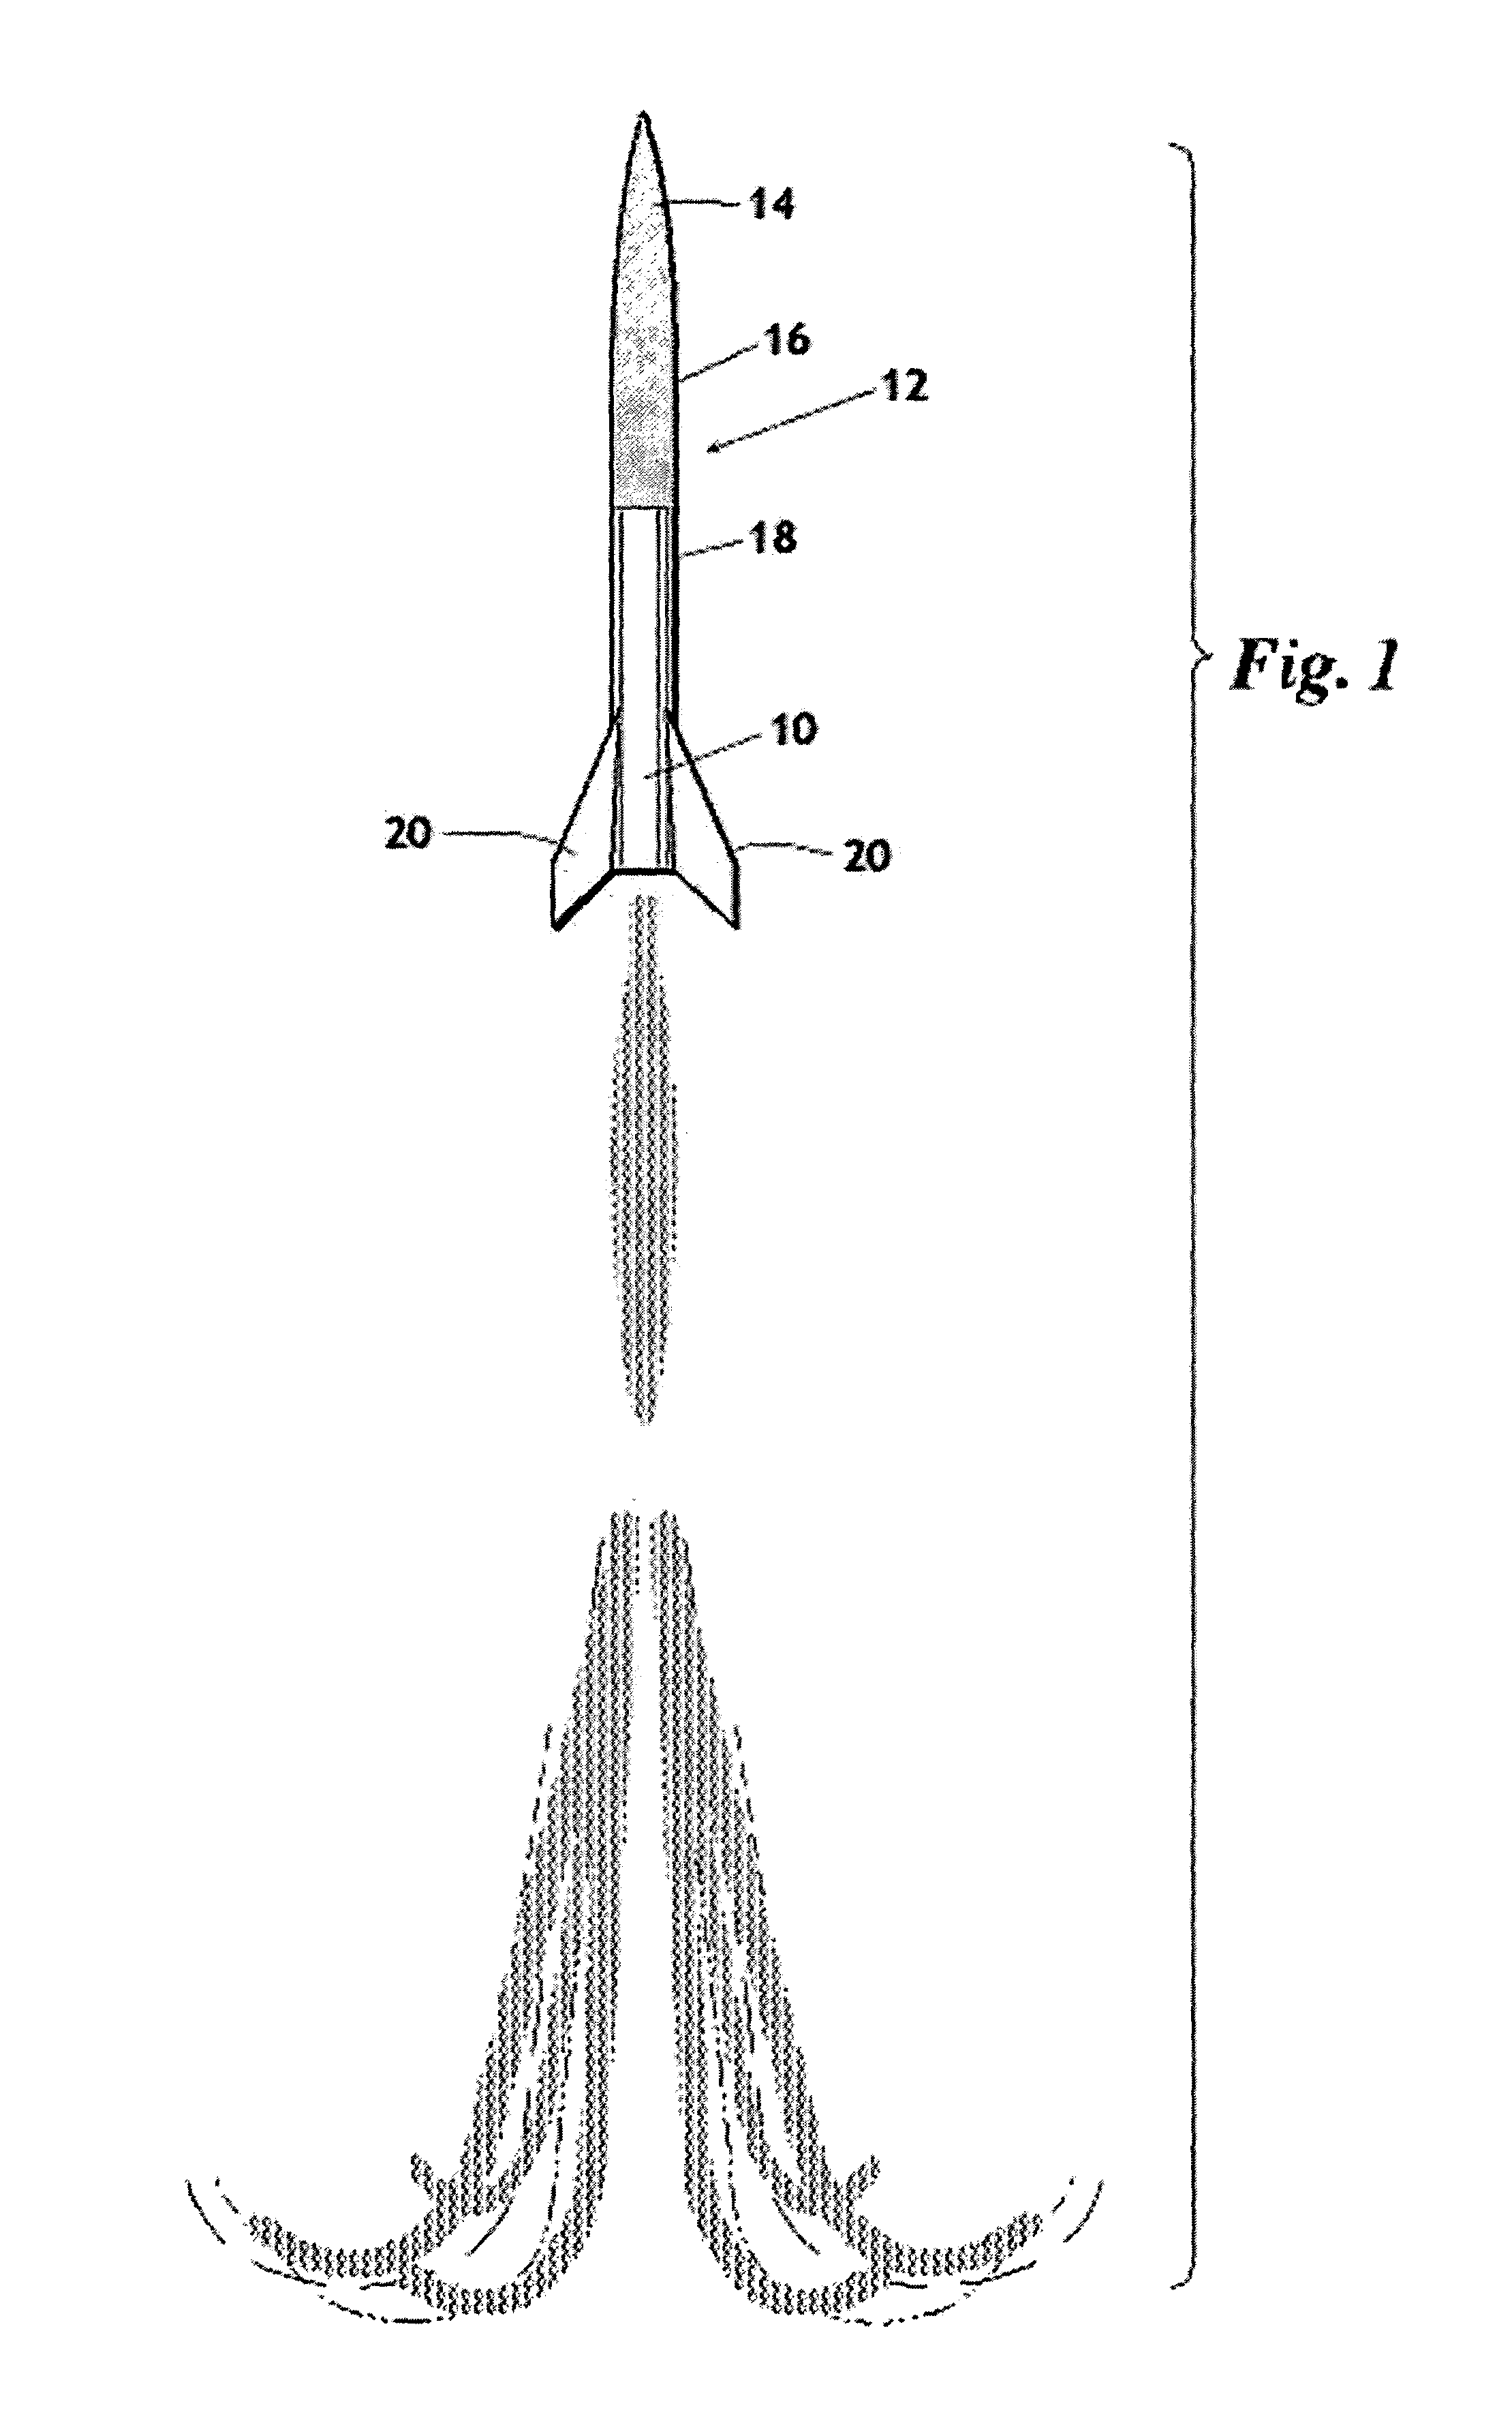 Liquid propellant rocket motor